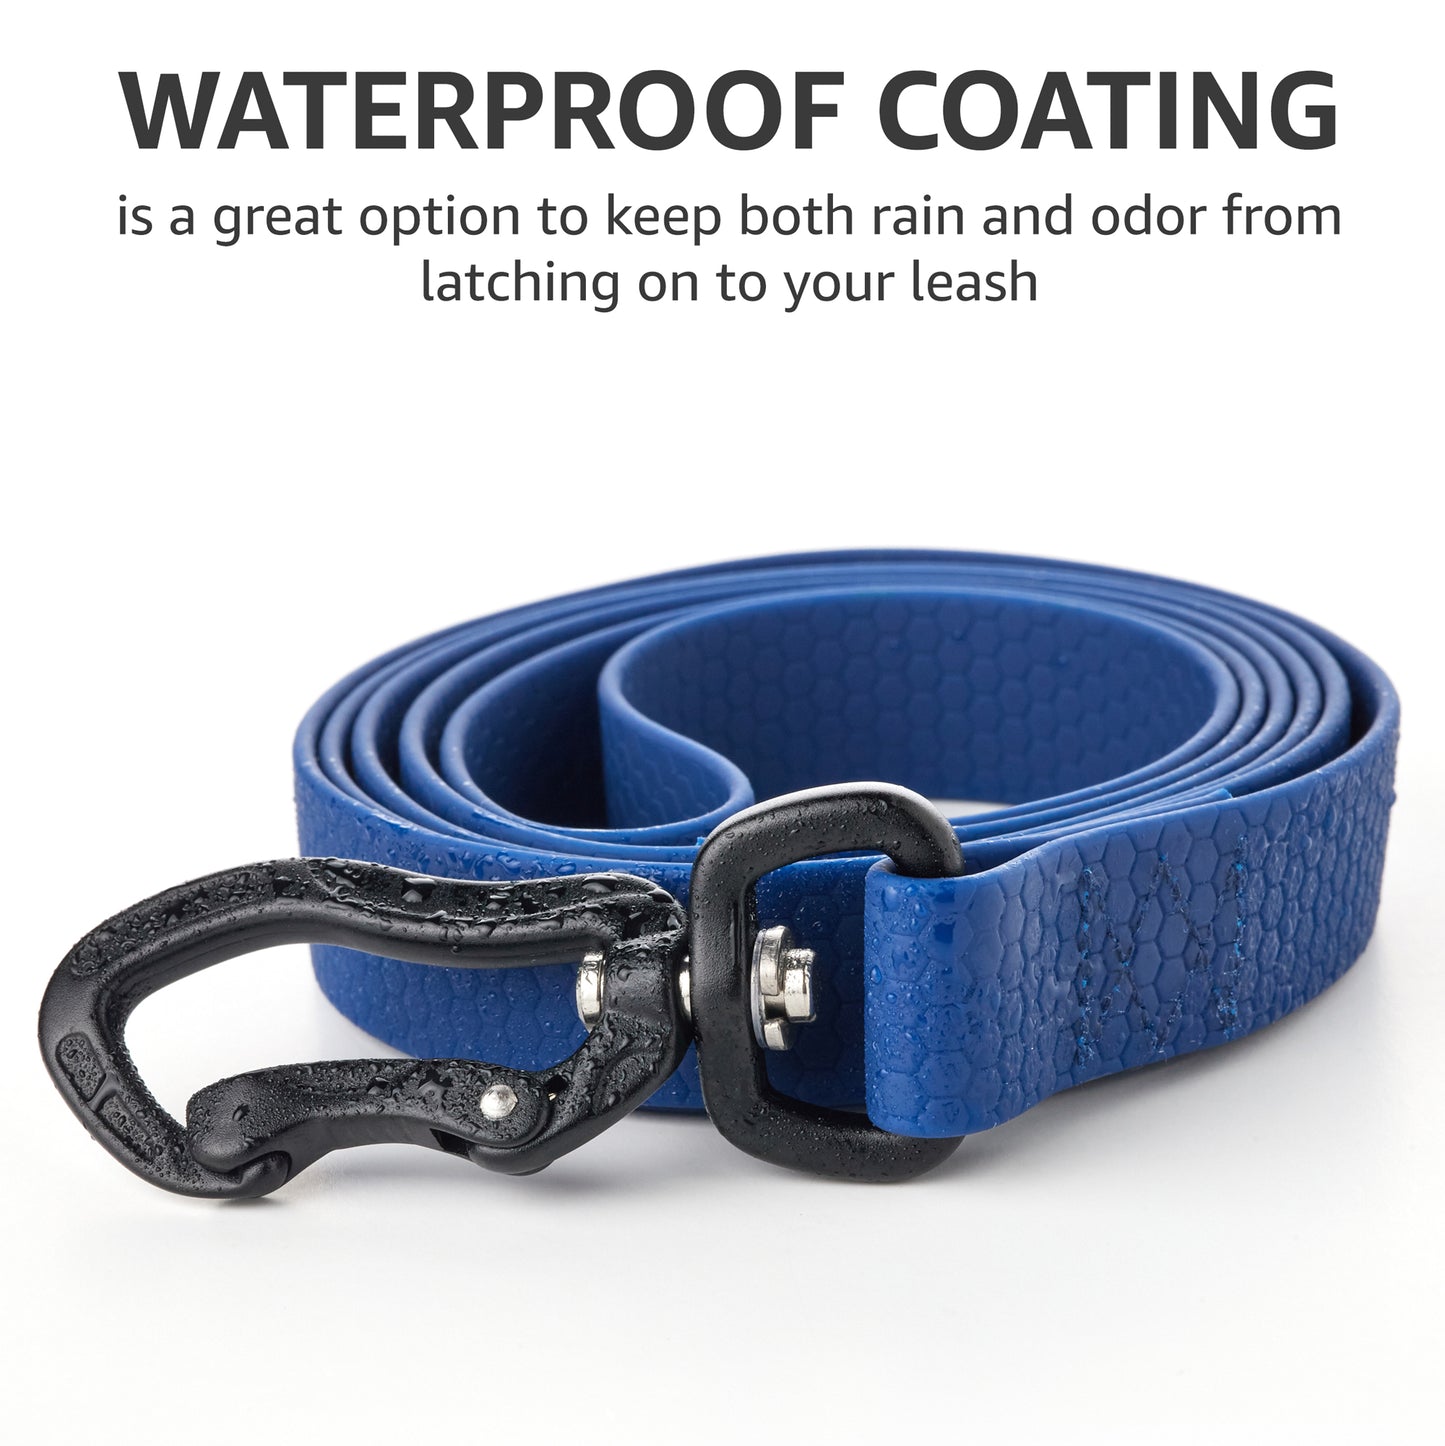 4 foot dog leash waterproof coating